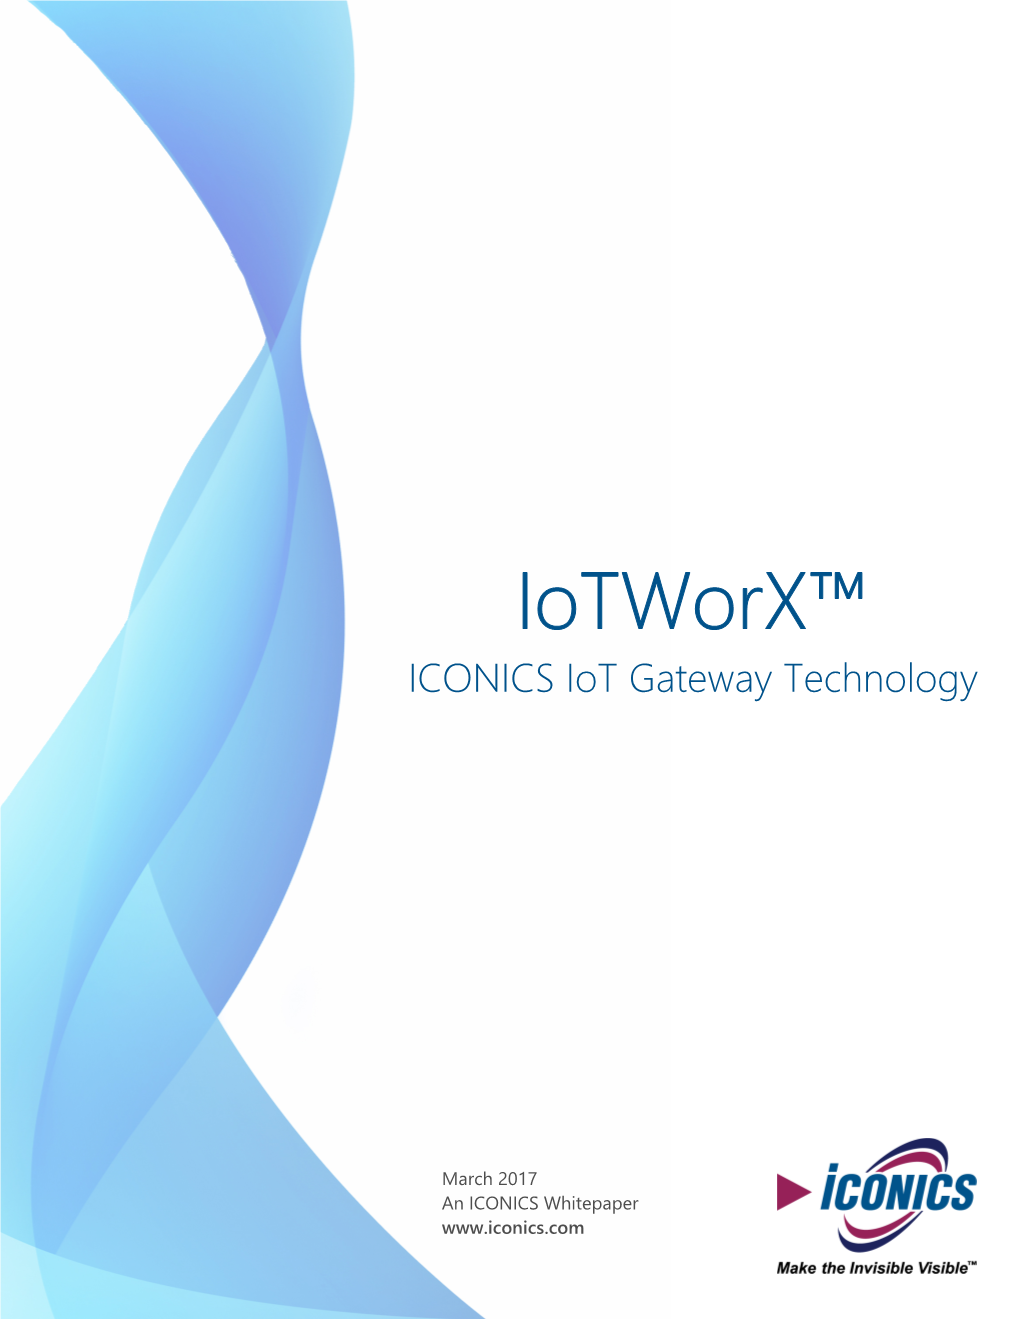 Iotworx™ ICONICS Iot Gateway Technology